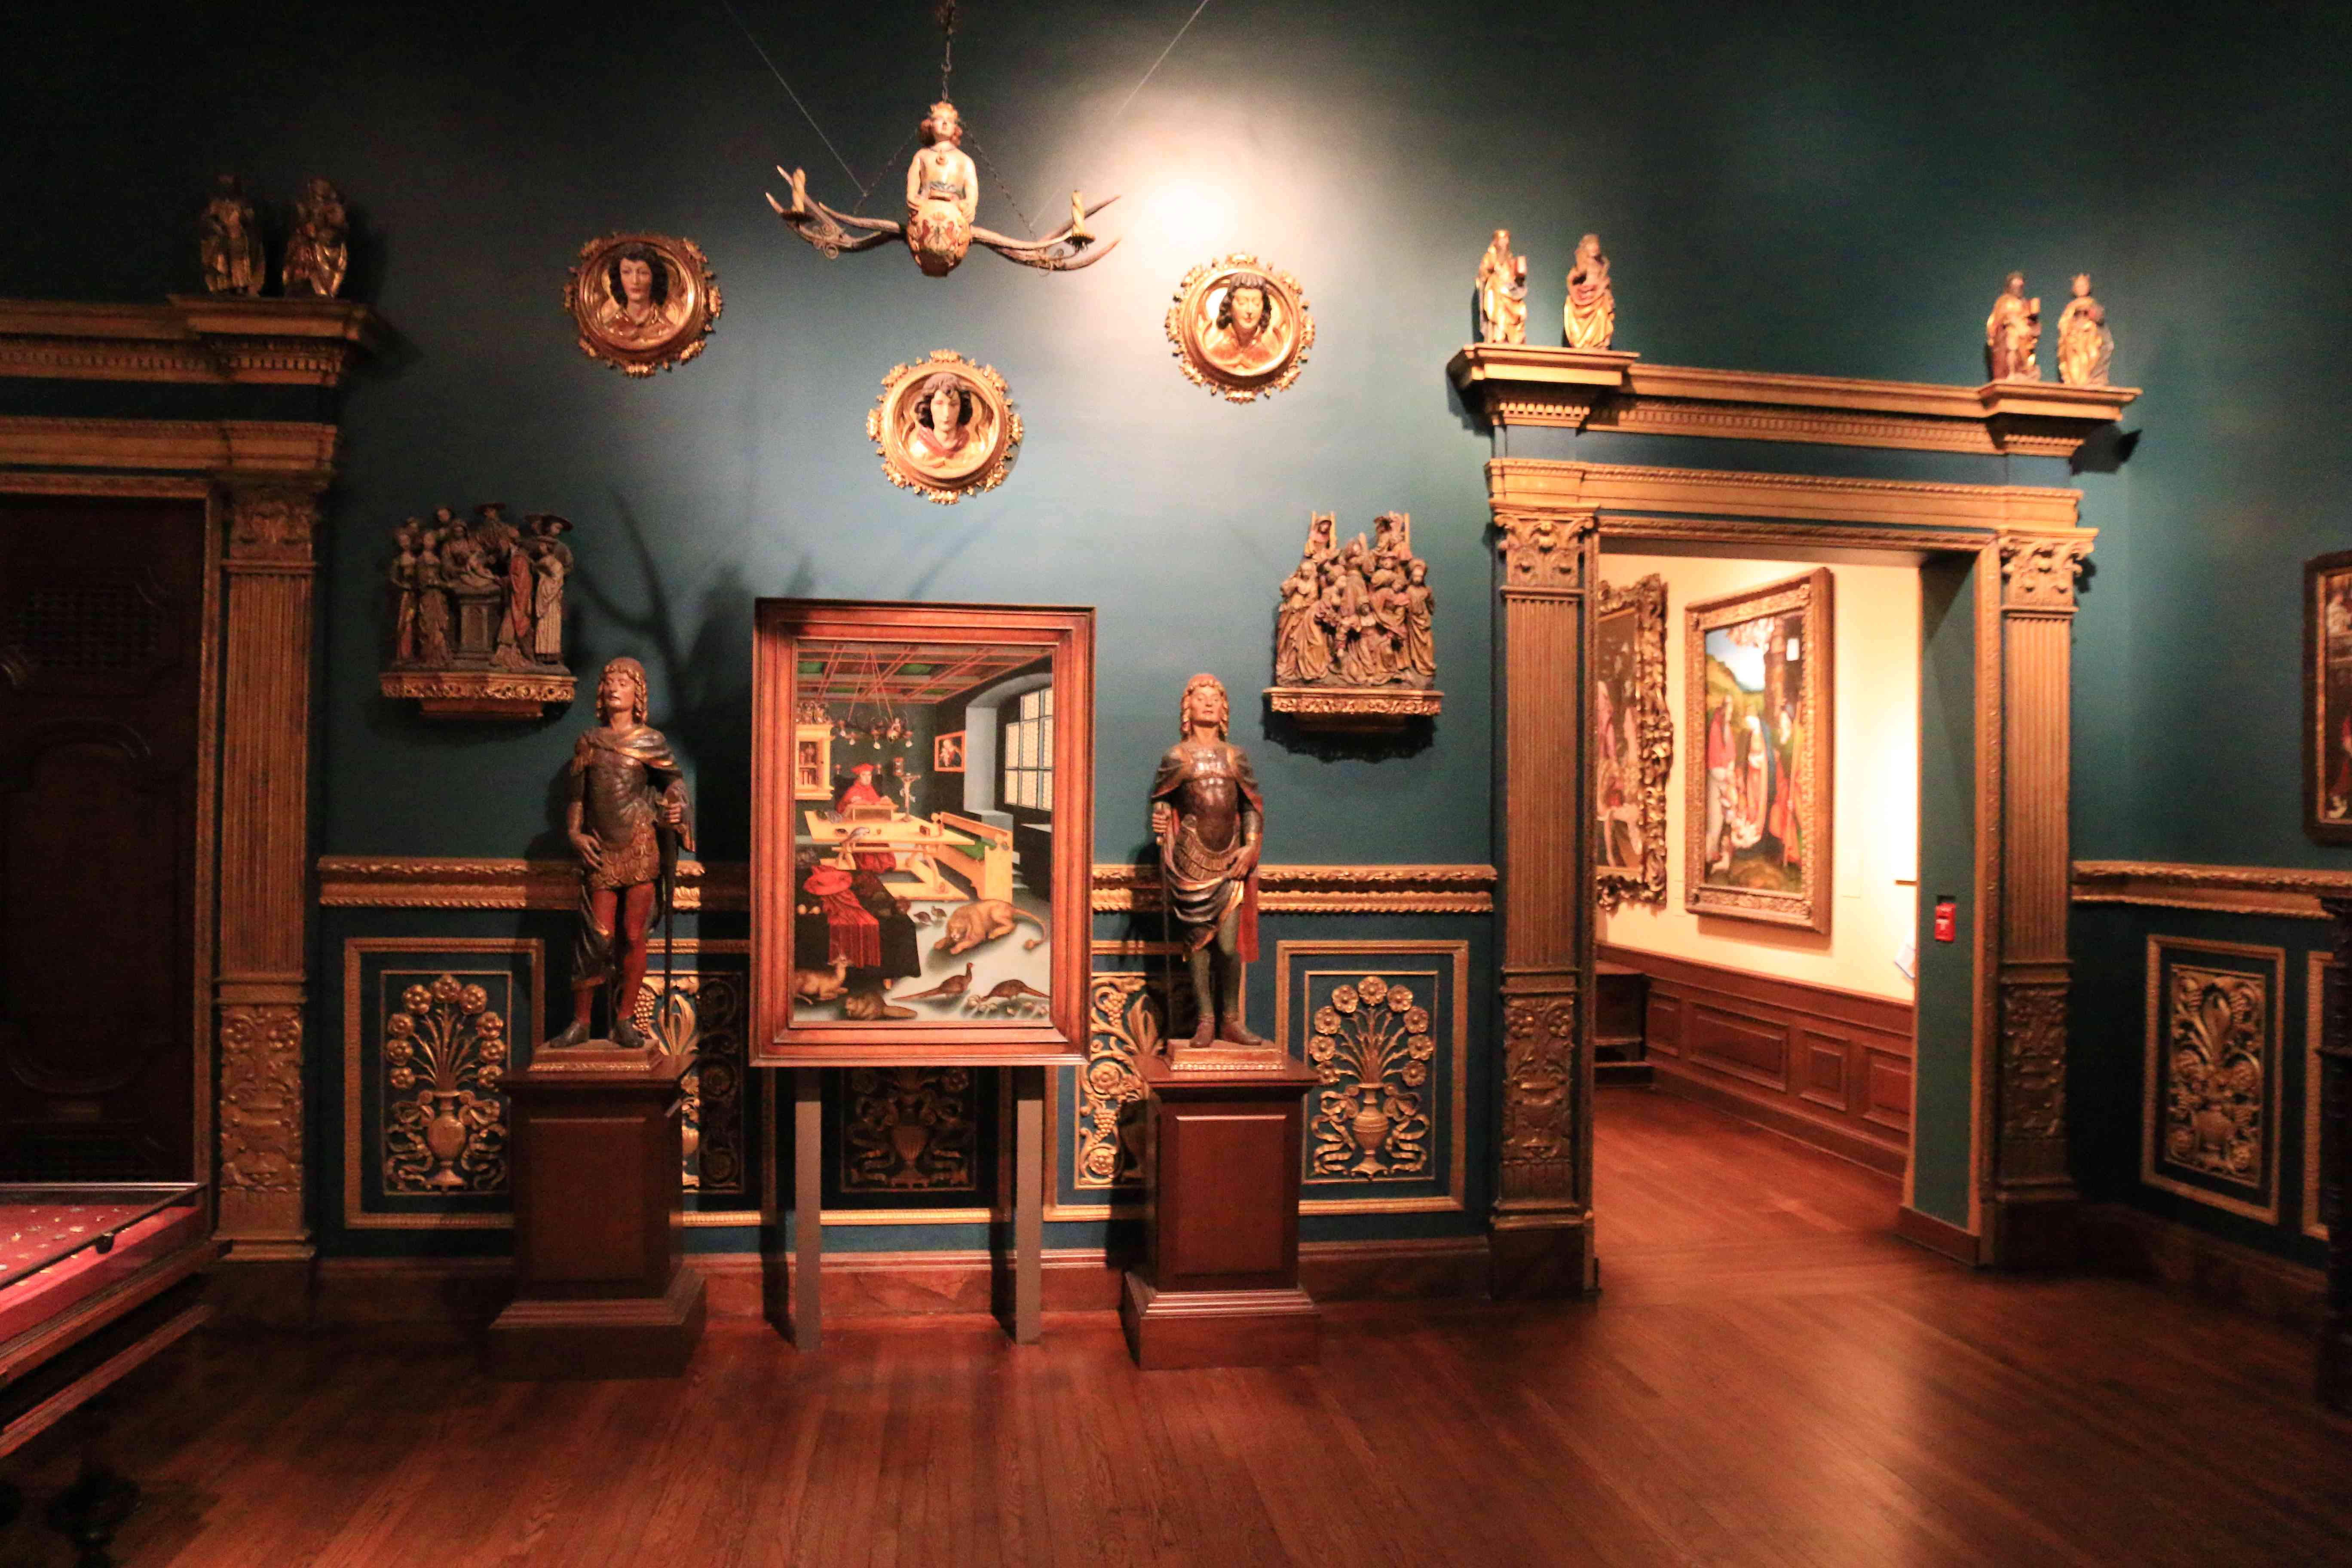 Museum Gallery